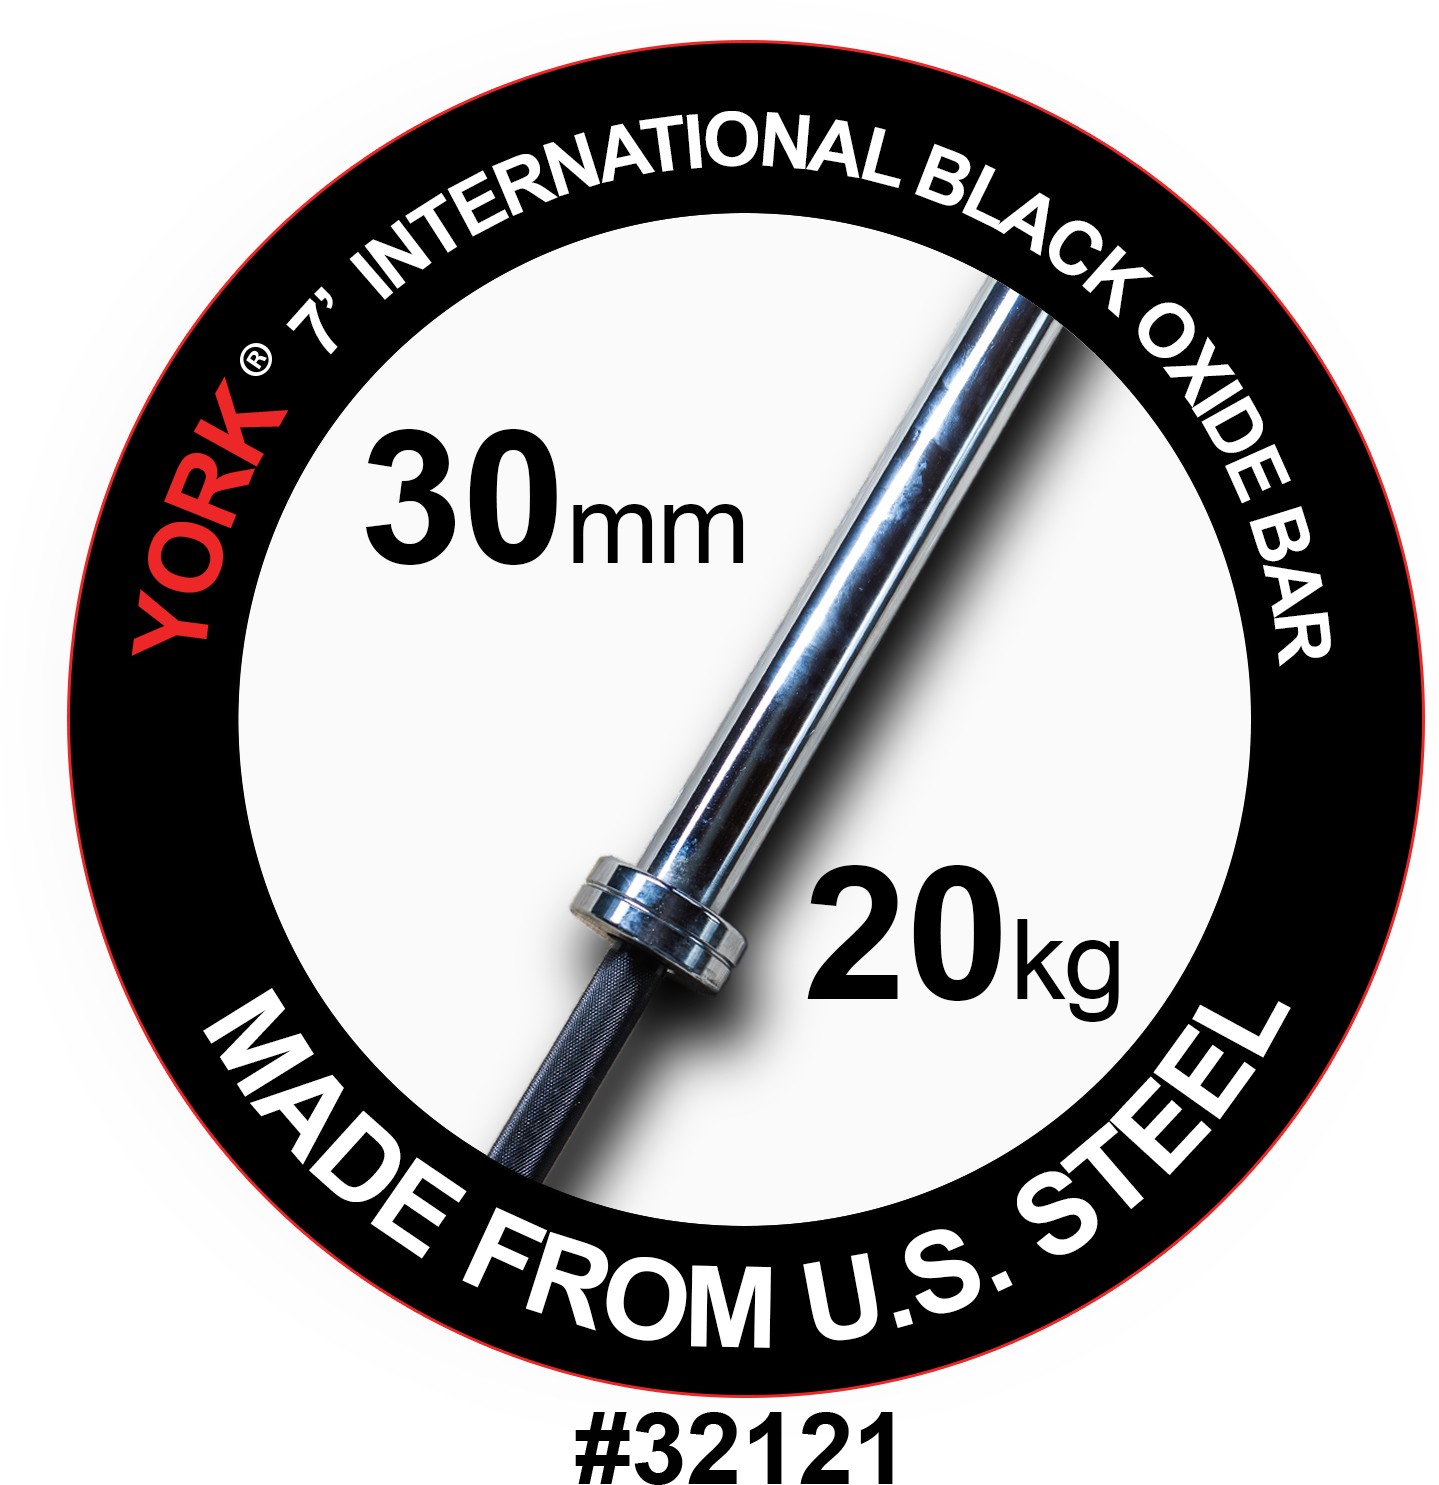 York 7′ International Black Oxide Bar – 30mm (New)